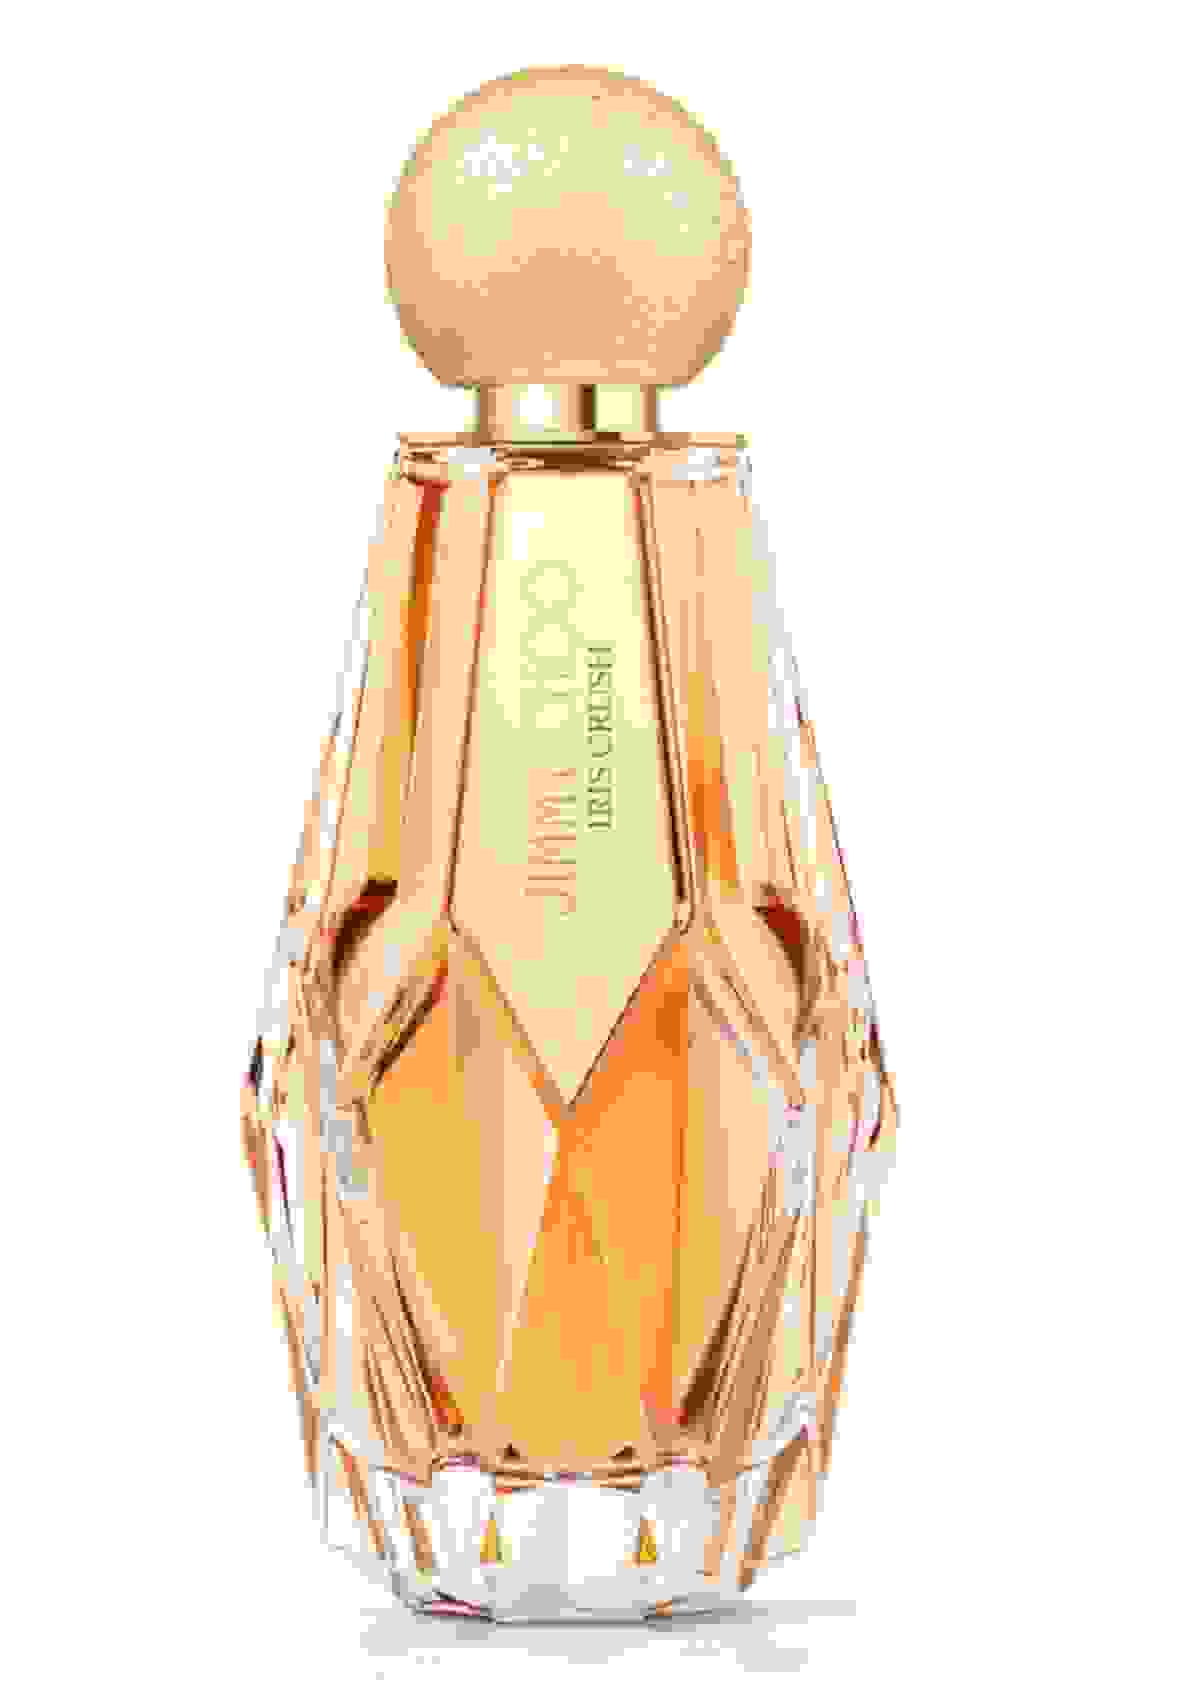 Jimmy Choo women’s fragrance Iris Crush in multi-faceted glass bottle with gold glitter cap